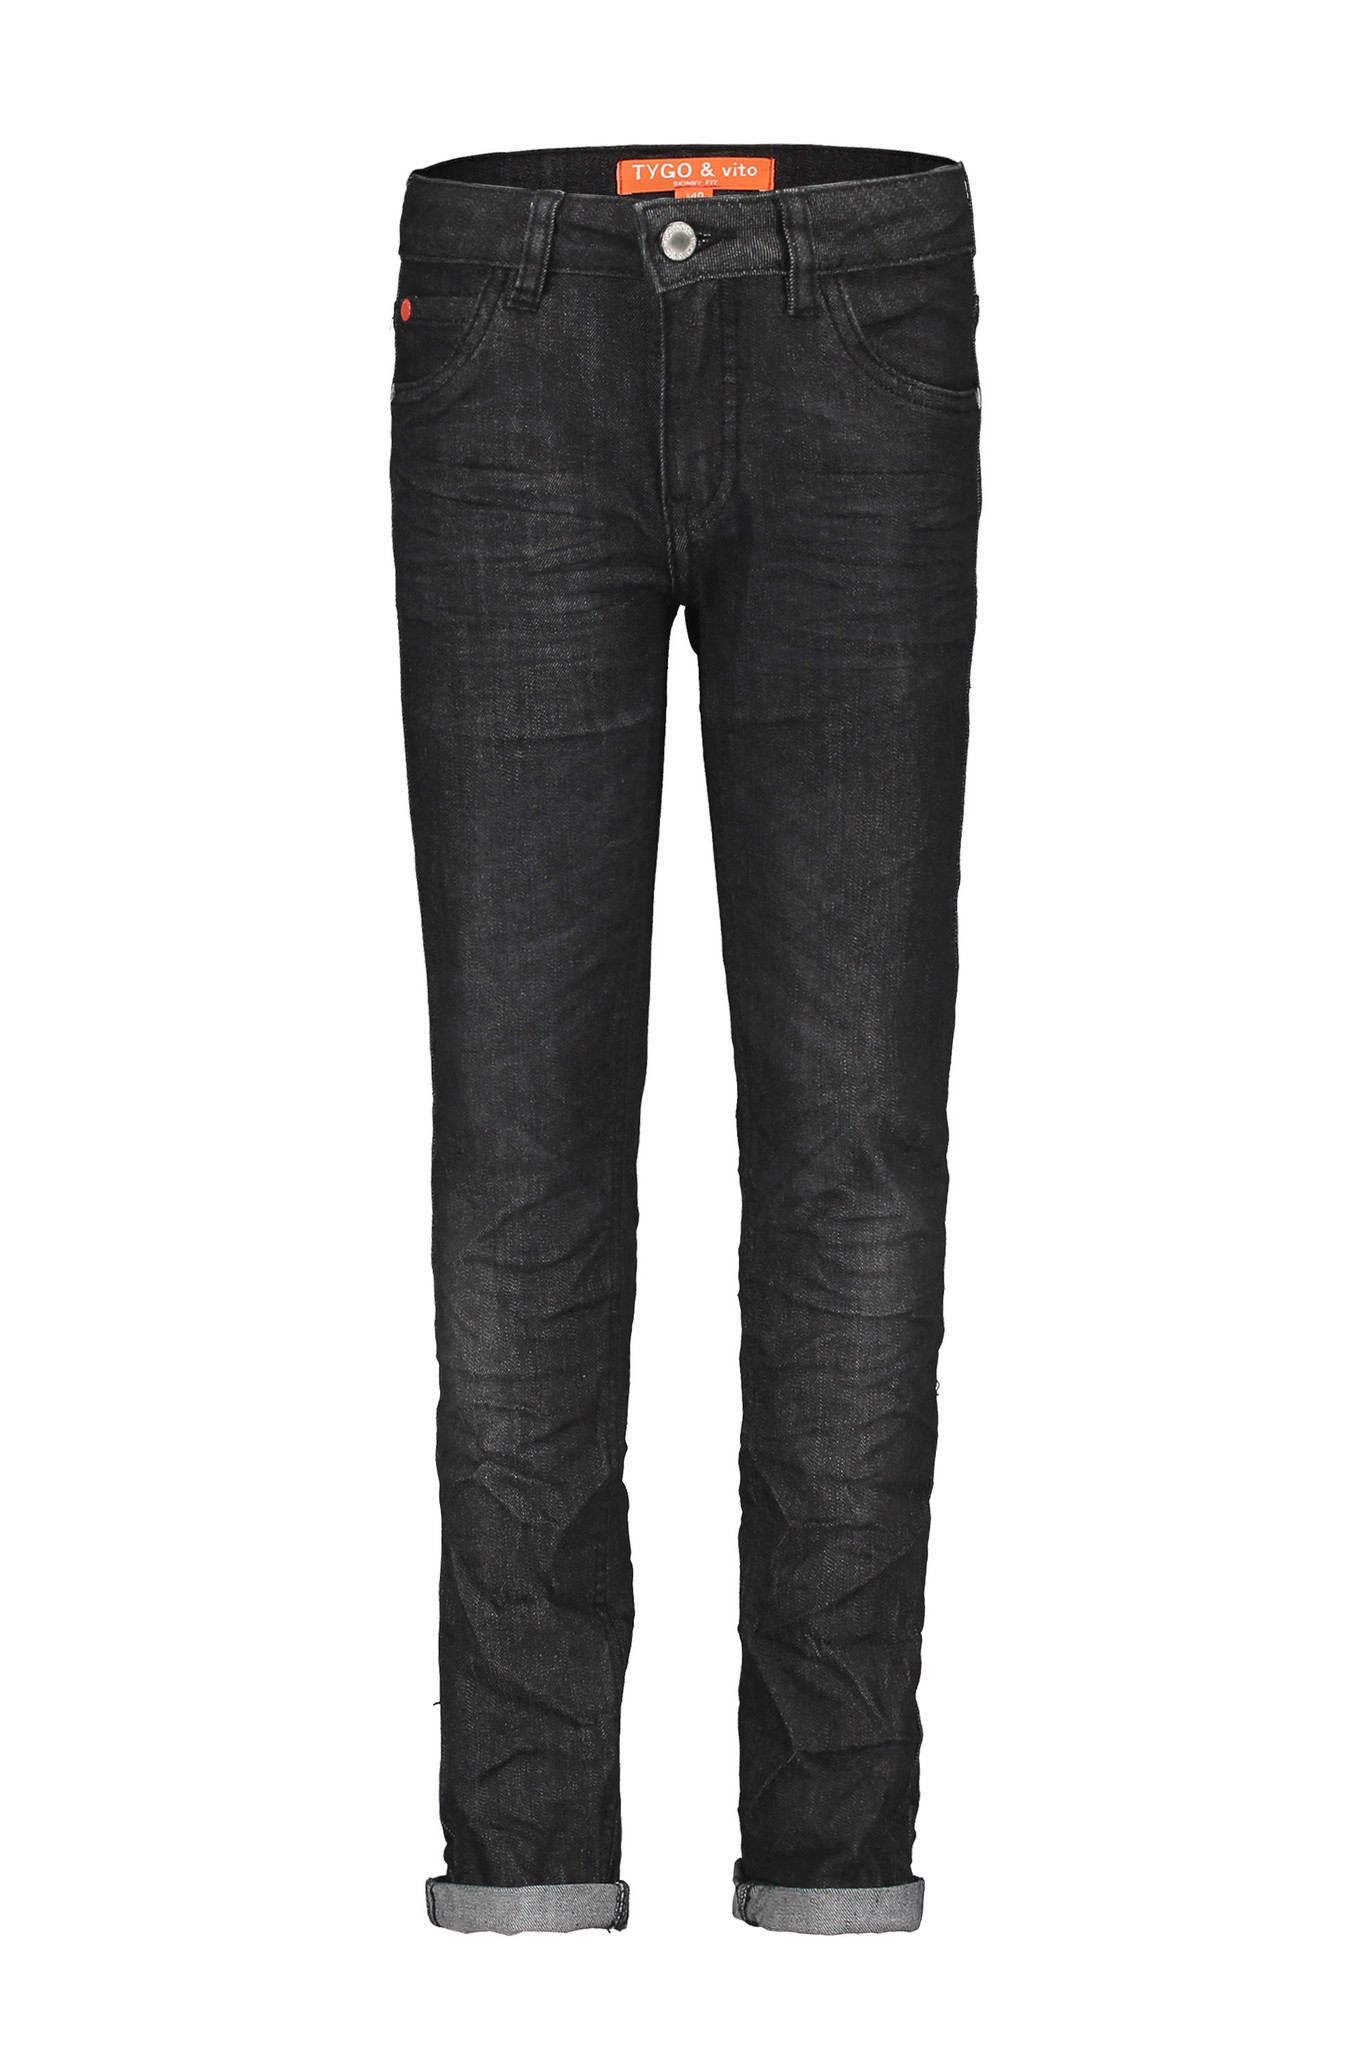 Tygo & Vito Jongens skinny stretch jeans broek - Zwart